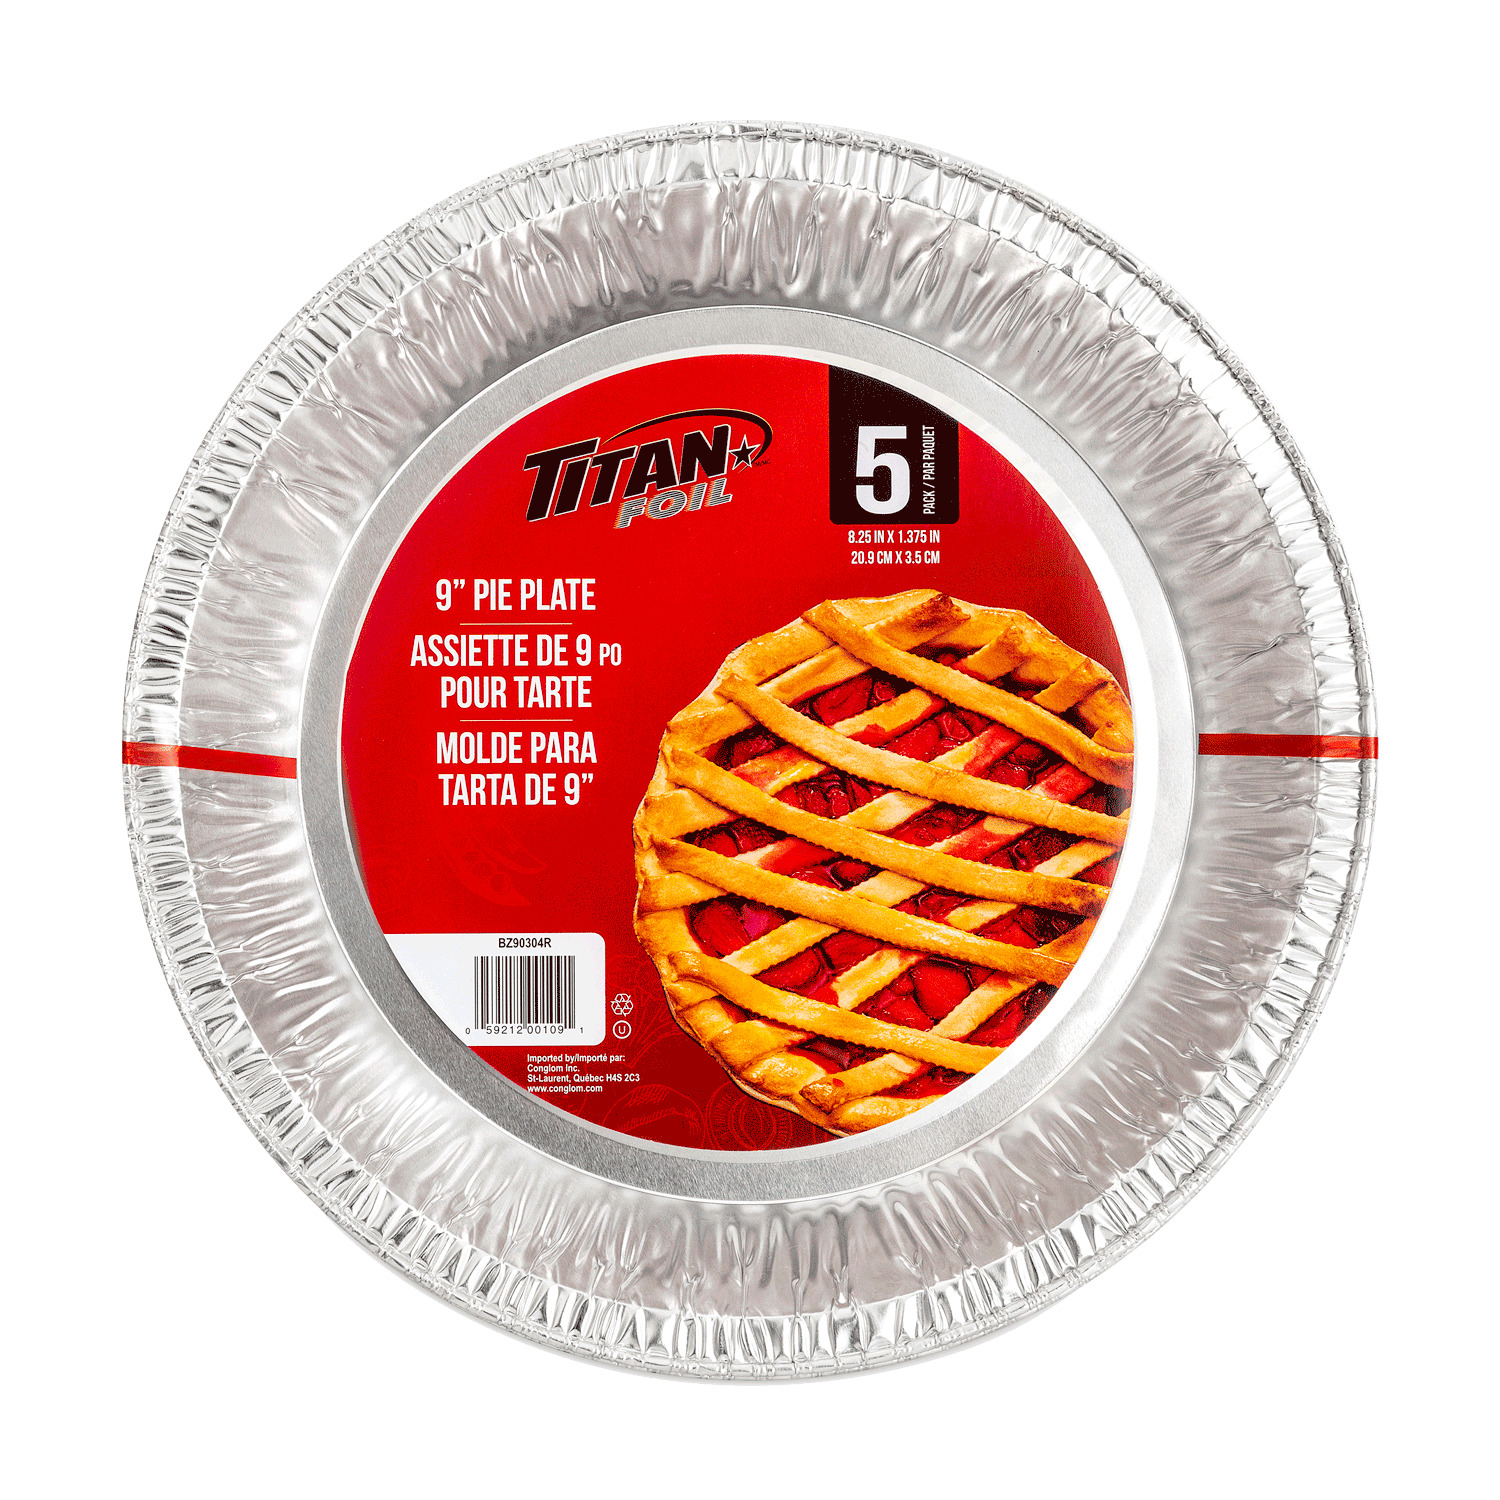 Titan Foil - Aluminum 9" deep pie plates, pk. of 5